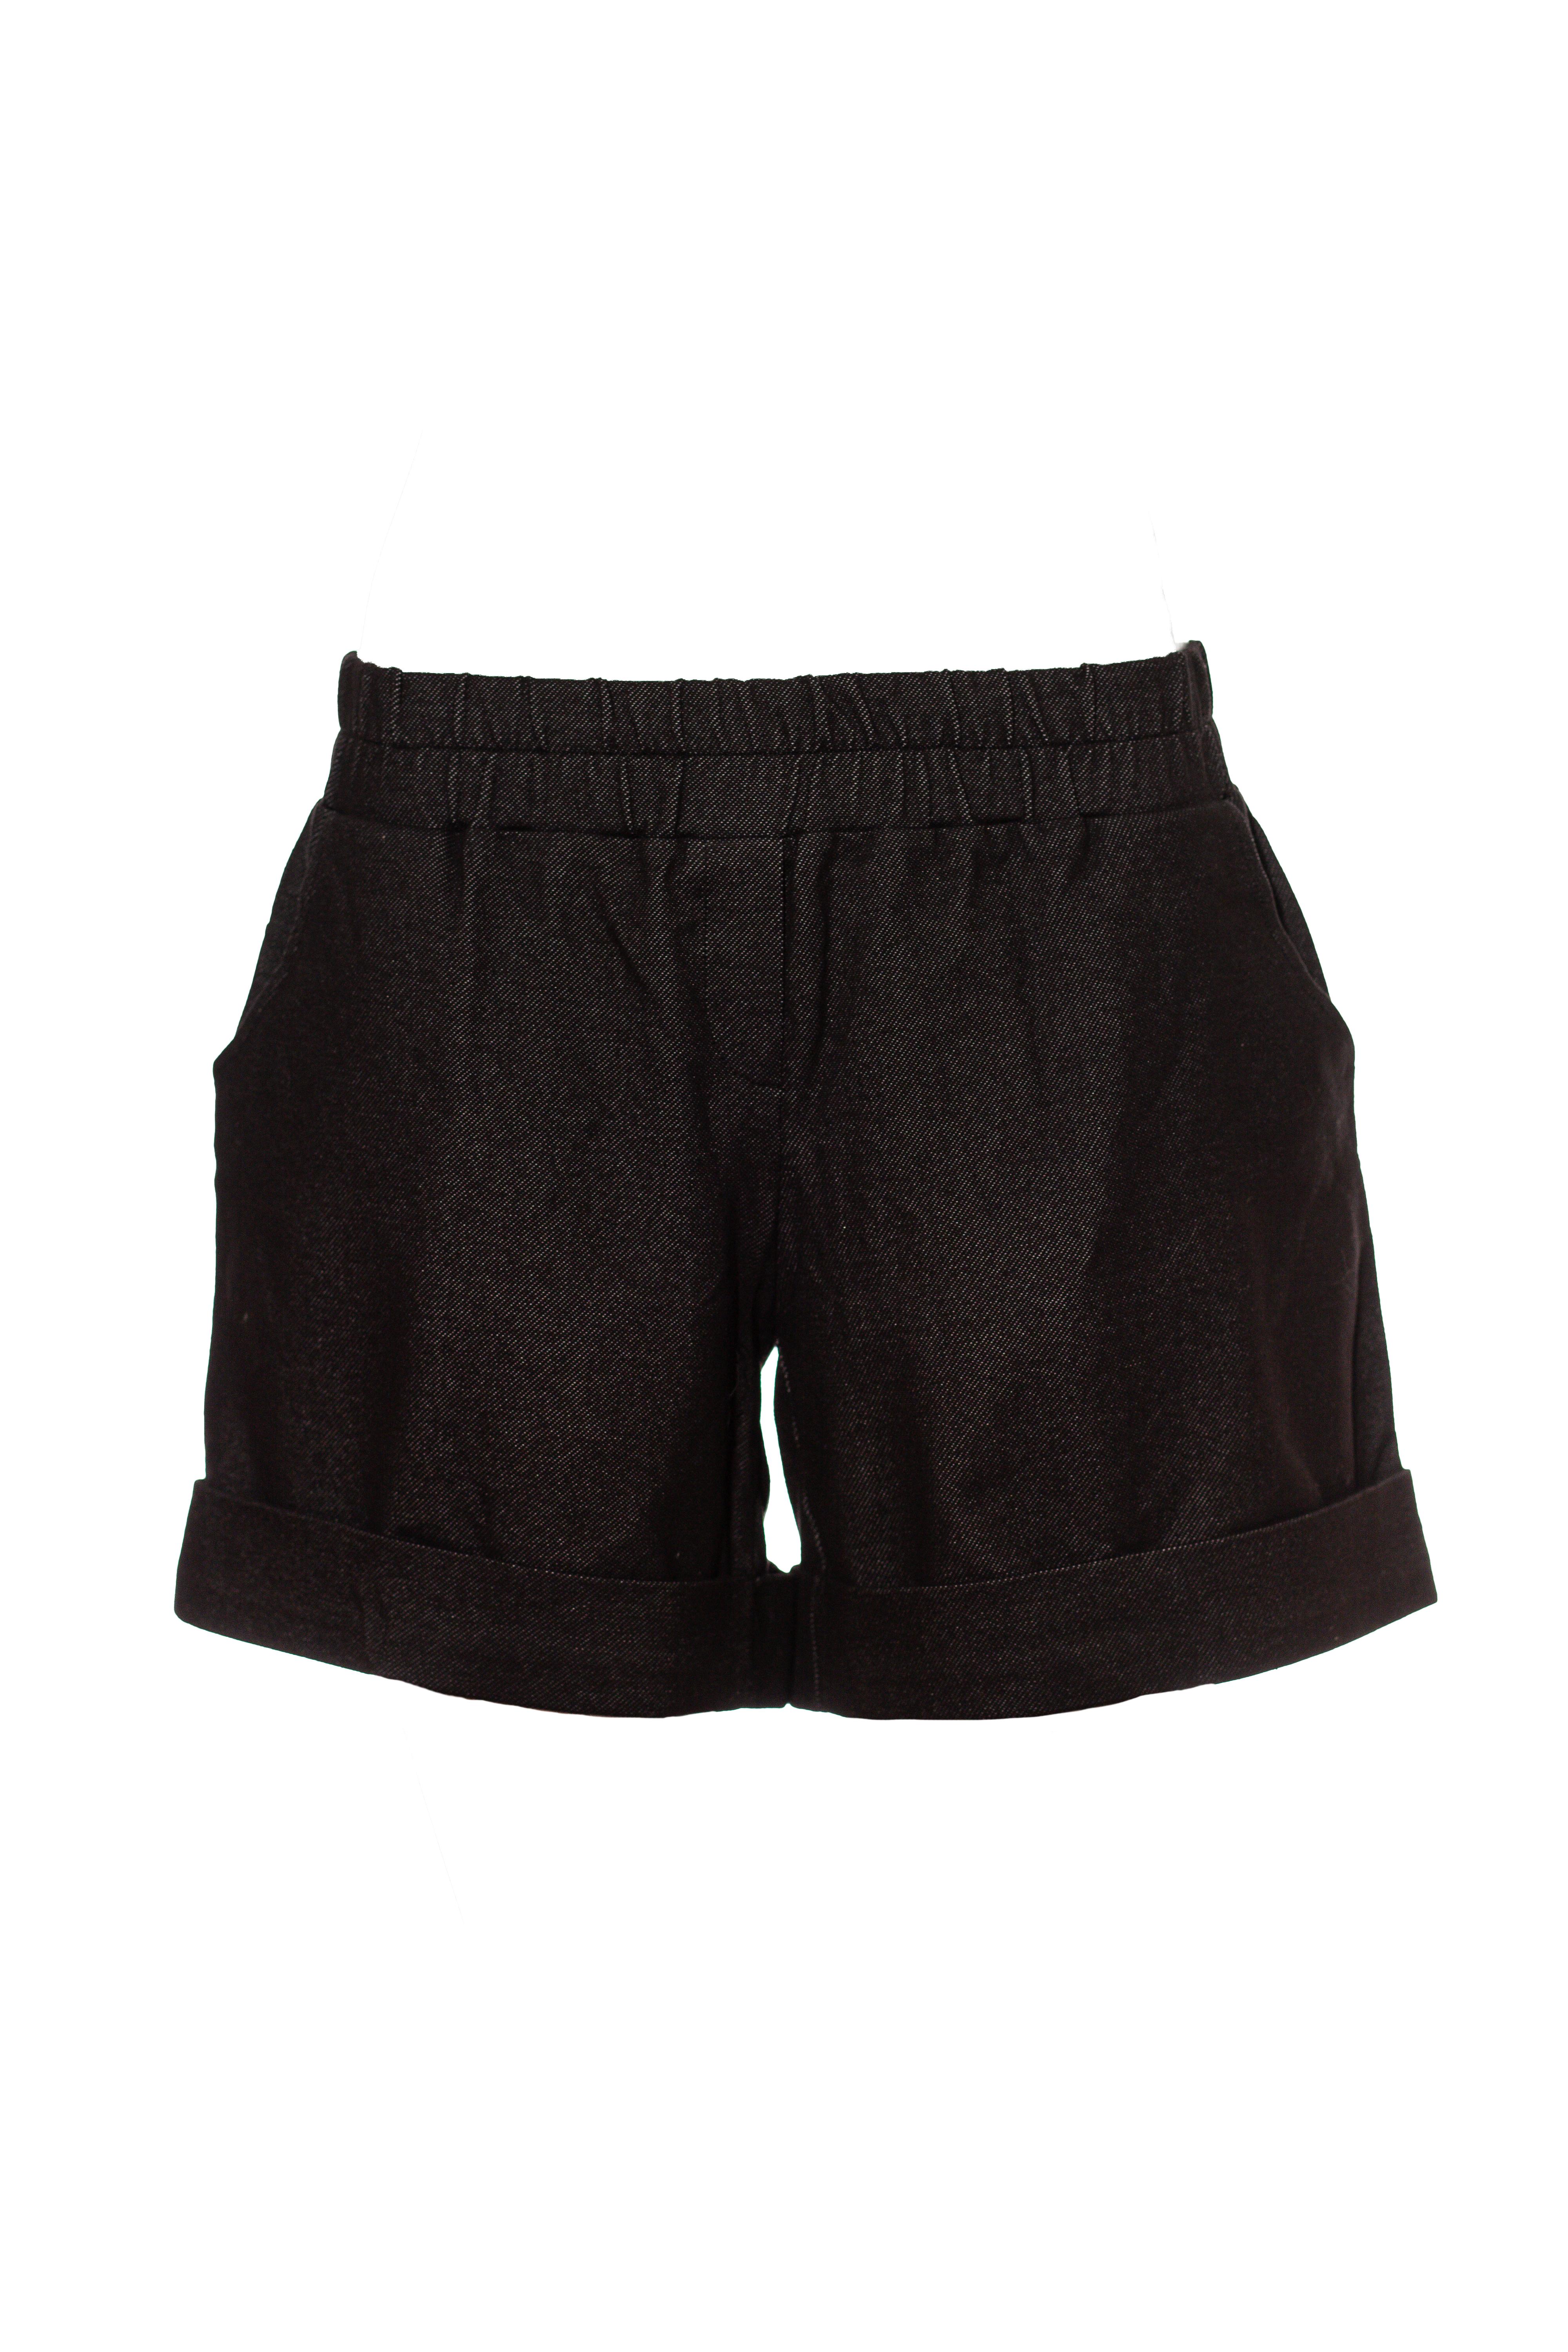 Levně Effetto Woman's Shorts 0146